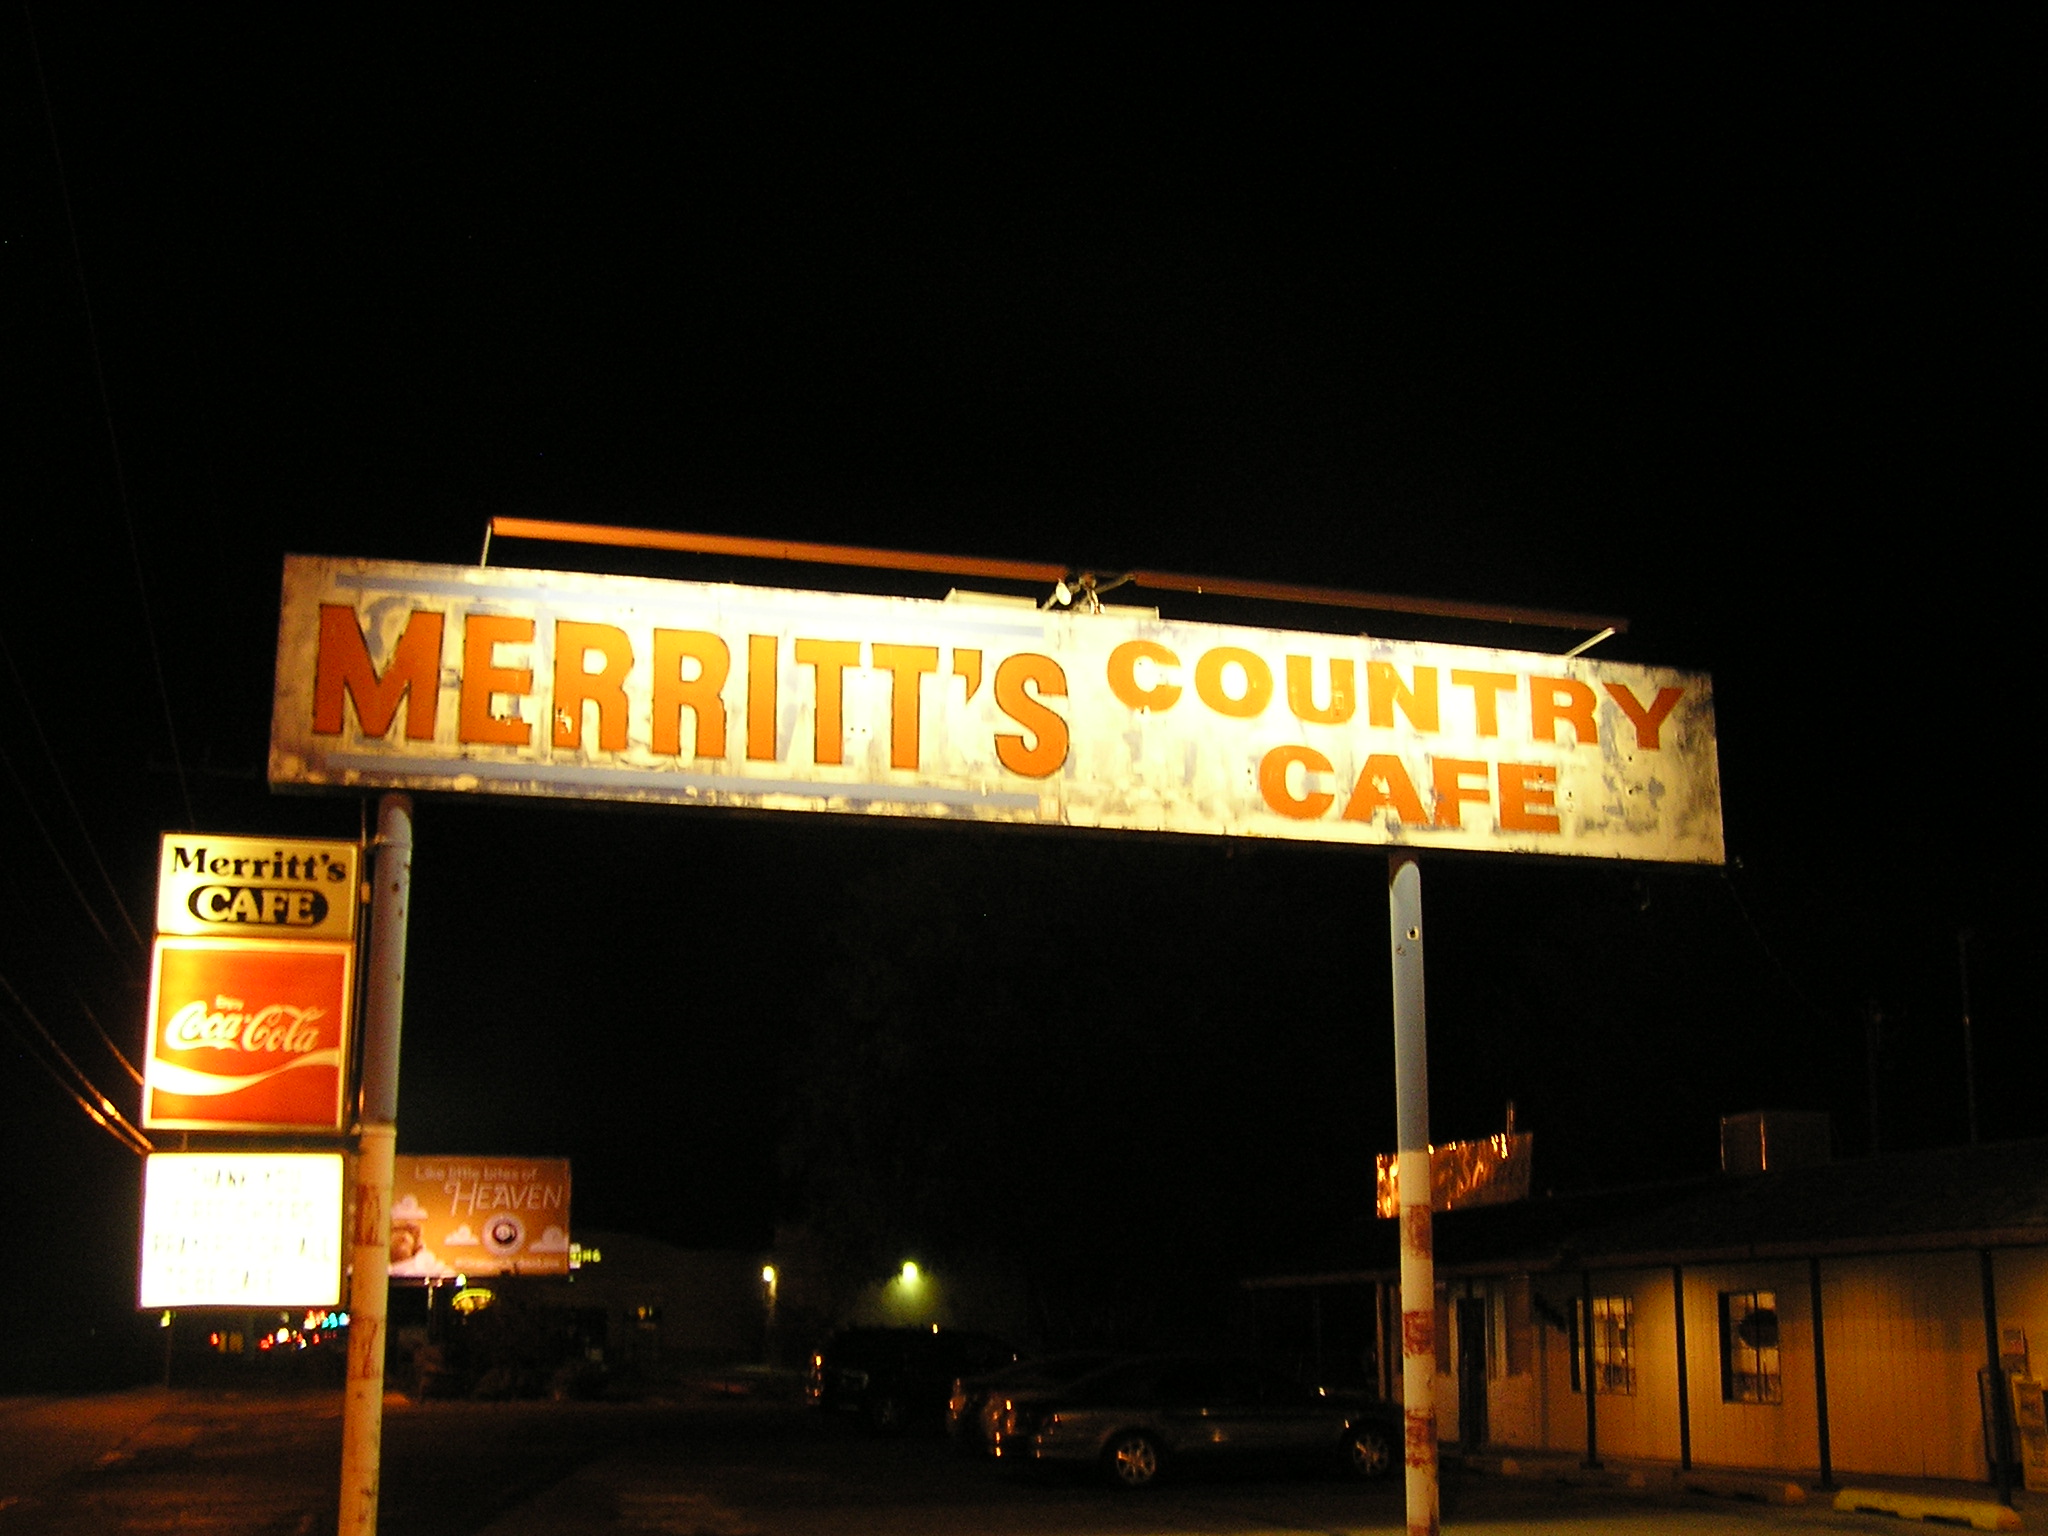 Merritt's Country Cafe outdoor sign